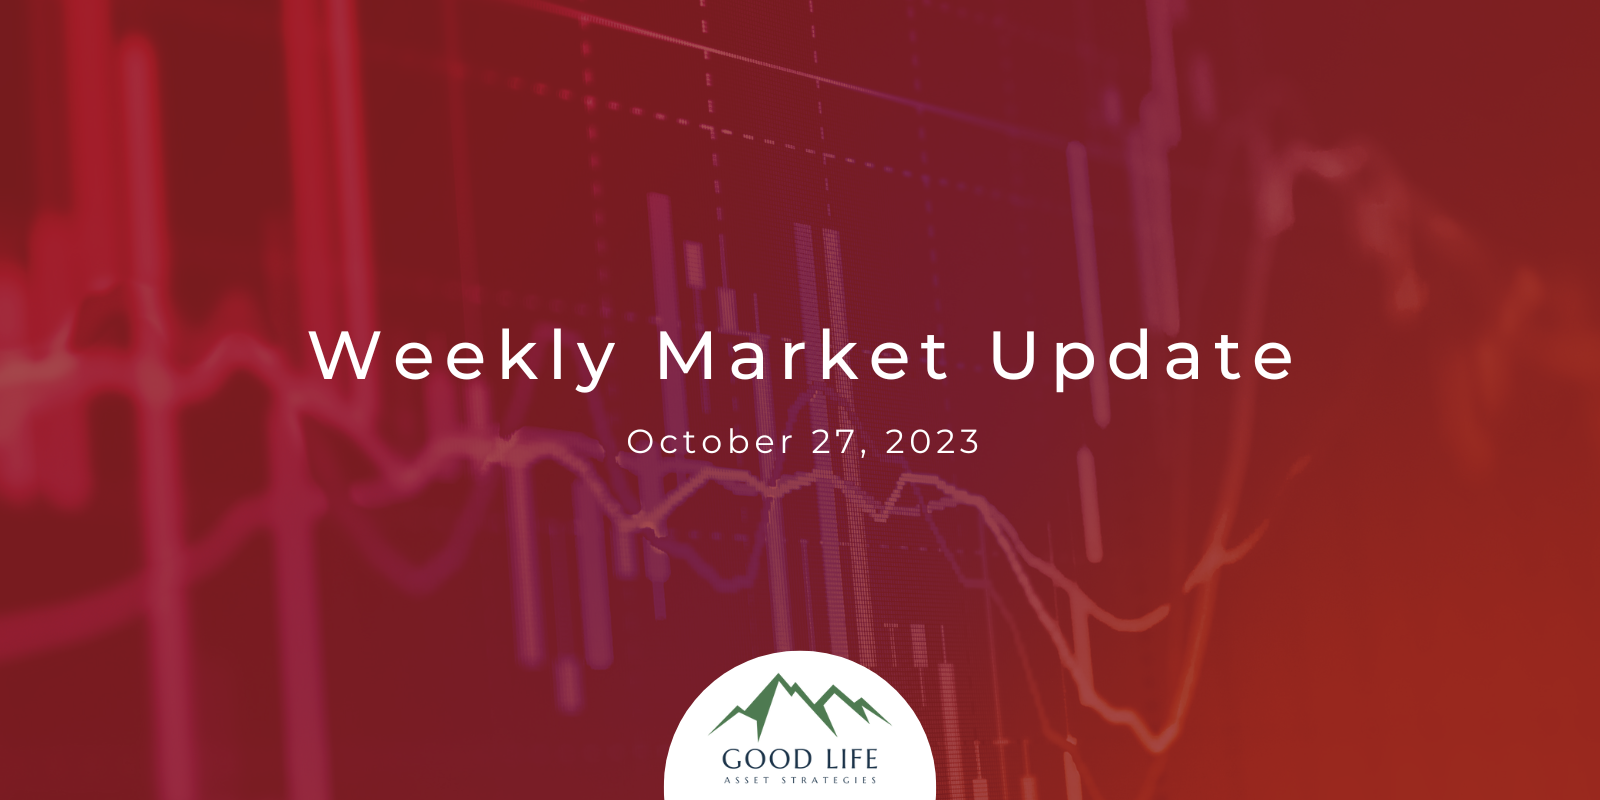 Weekly Market Update for October 27, 2023, from DeWayne Hall: Bull vs. bear market, where are stocks headed?